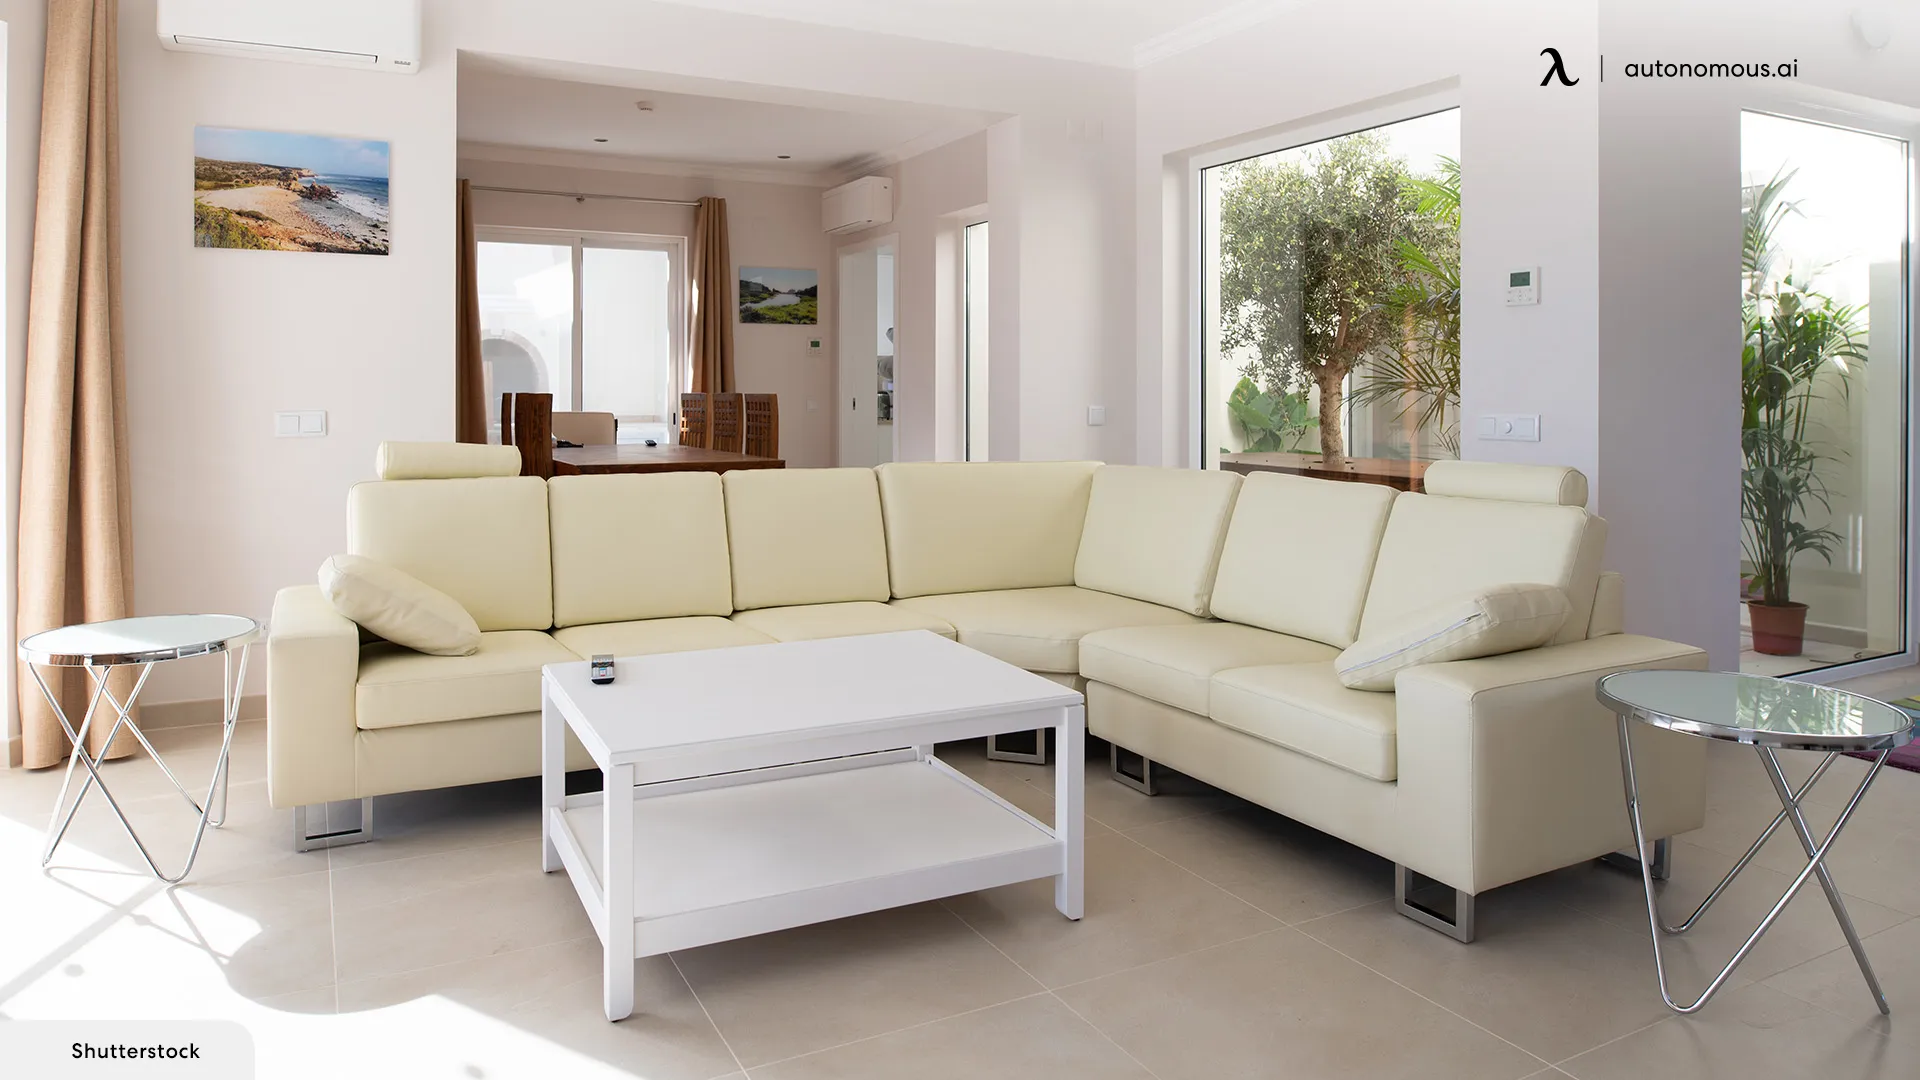 L-shaped Couch - corner decor ideas